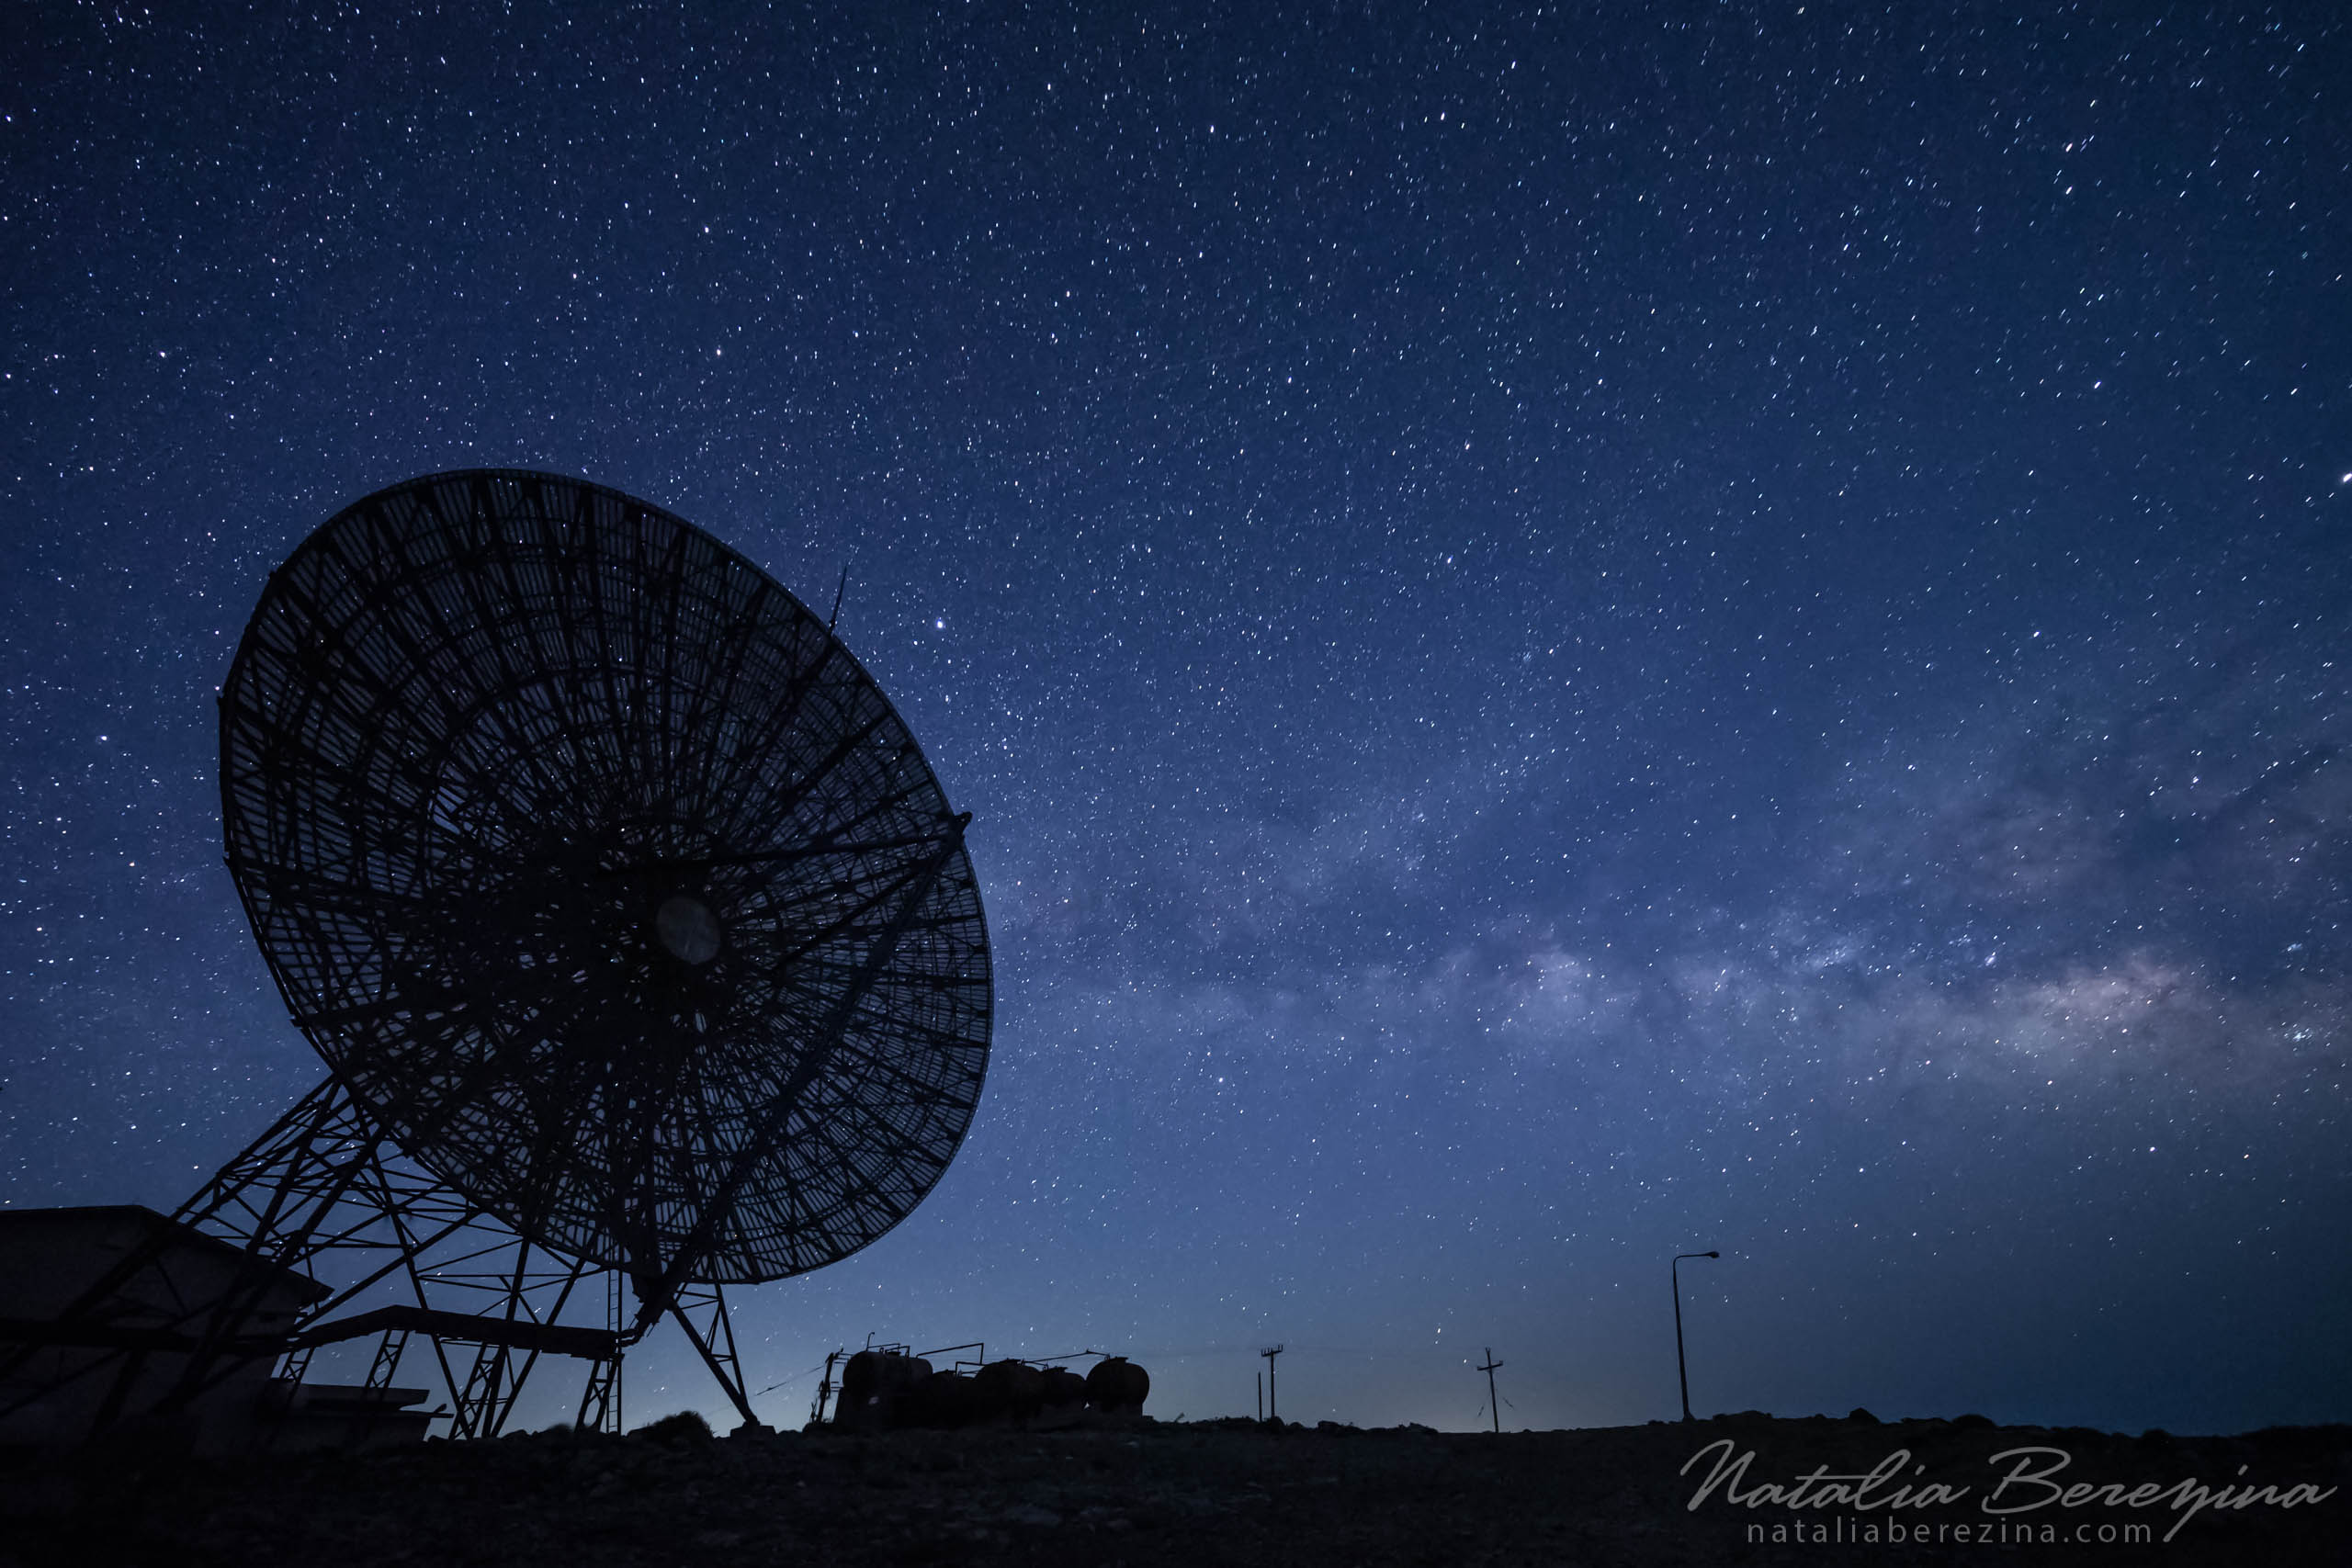 Greece, Crete, techno, landscape, night time, star sky, Milky Way CR1-NBDK1U9390 - Crete, Greece - Natalia Berezina Photography